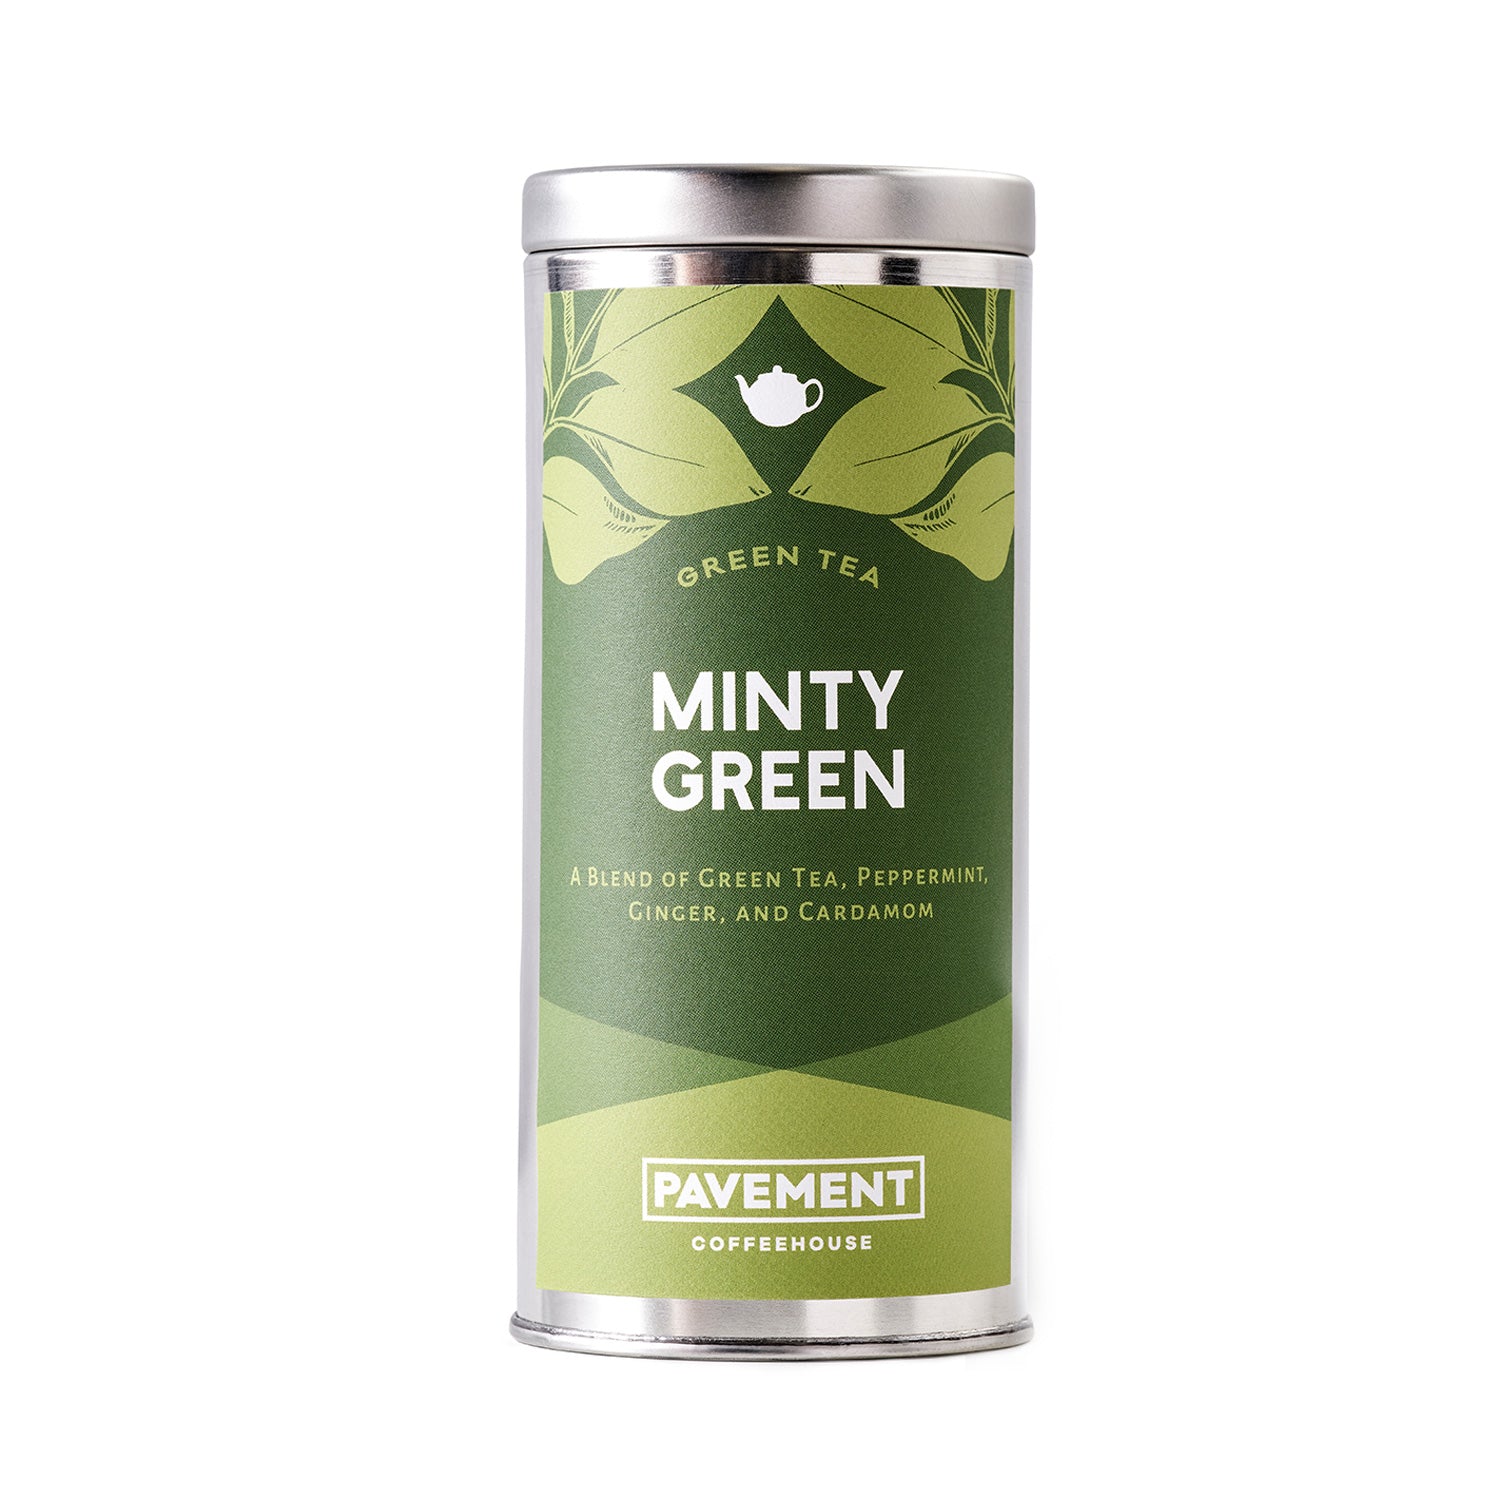 Minty Green